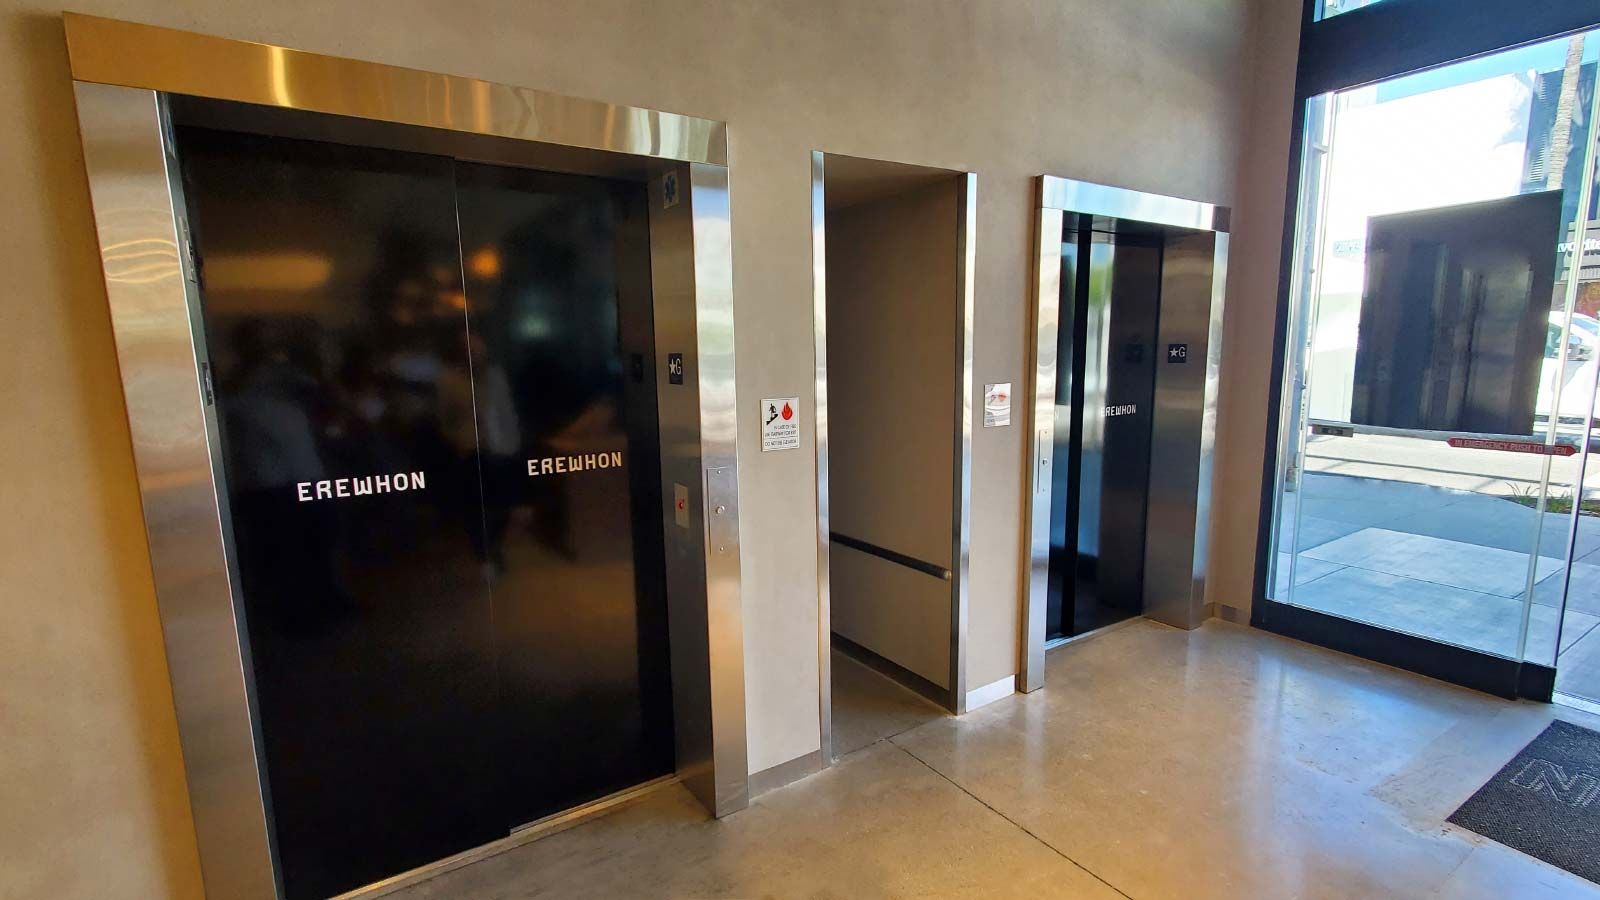 Erewhon vinyl lettering applied to the elevator doors